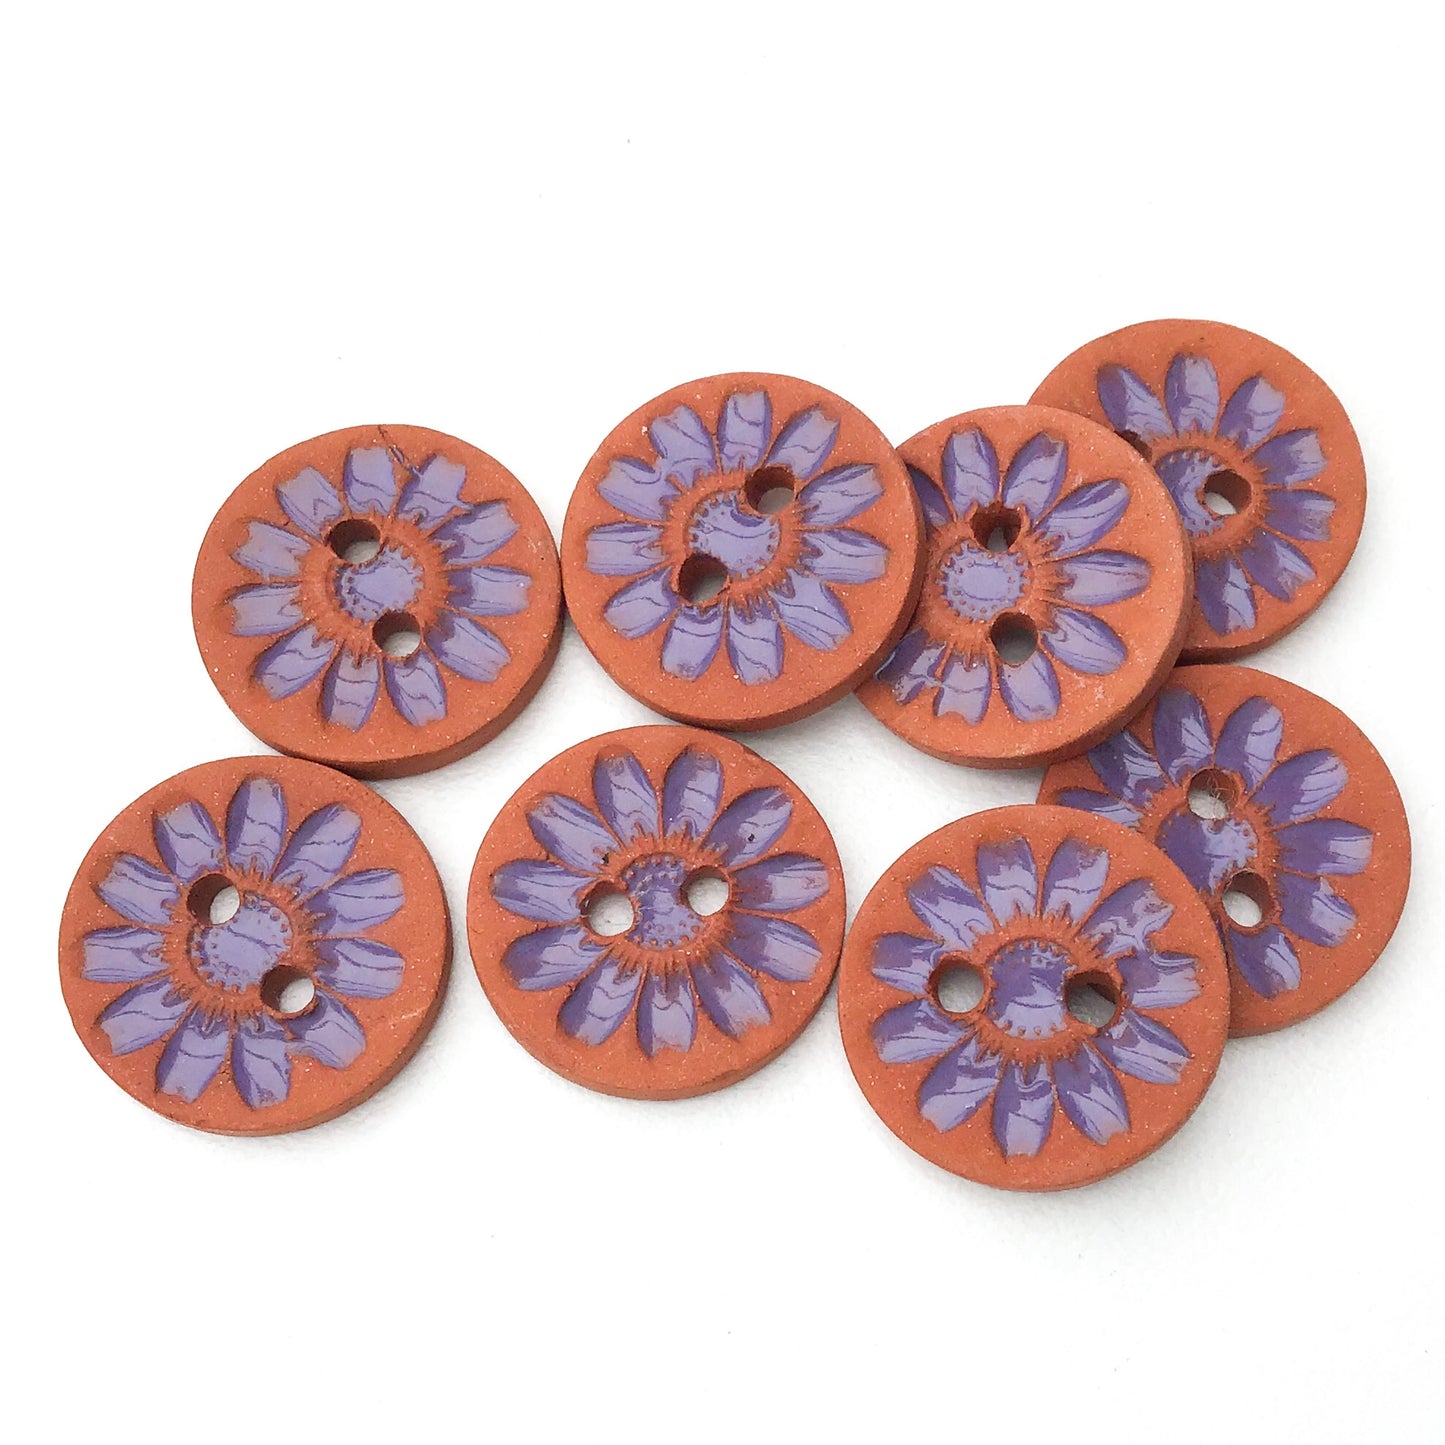 Ceramic Mum Flower Buttons - Small Ceramic Flower Buttons - Purple - 11/16" - 8 Pack (ws-35)